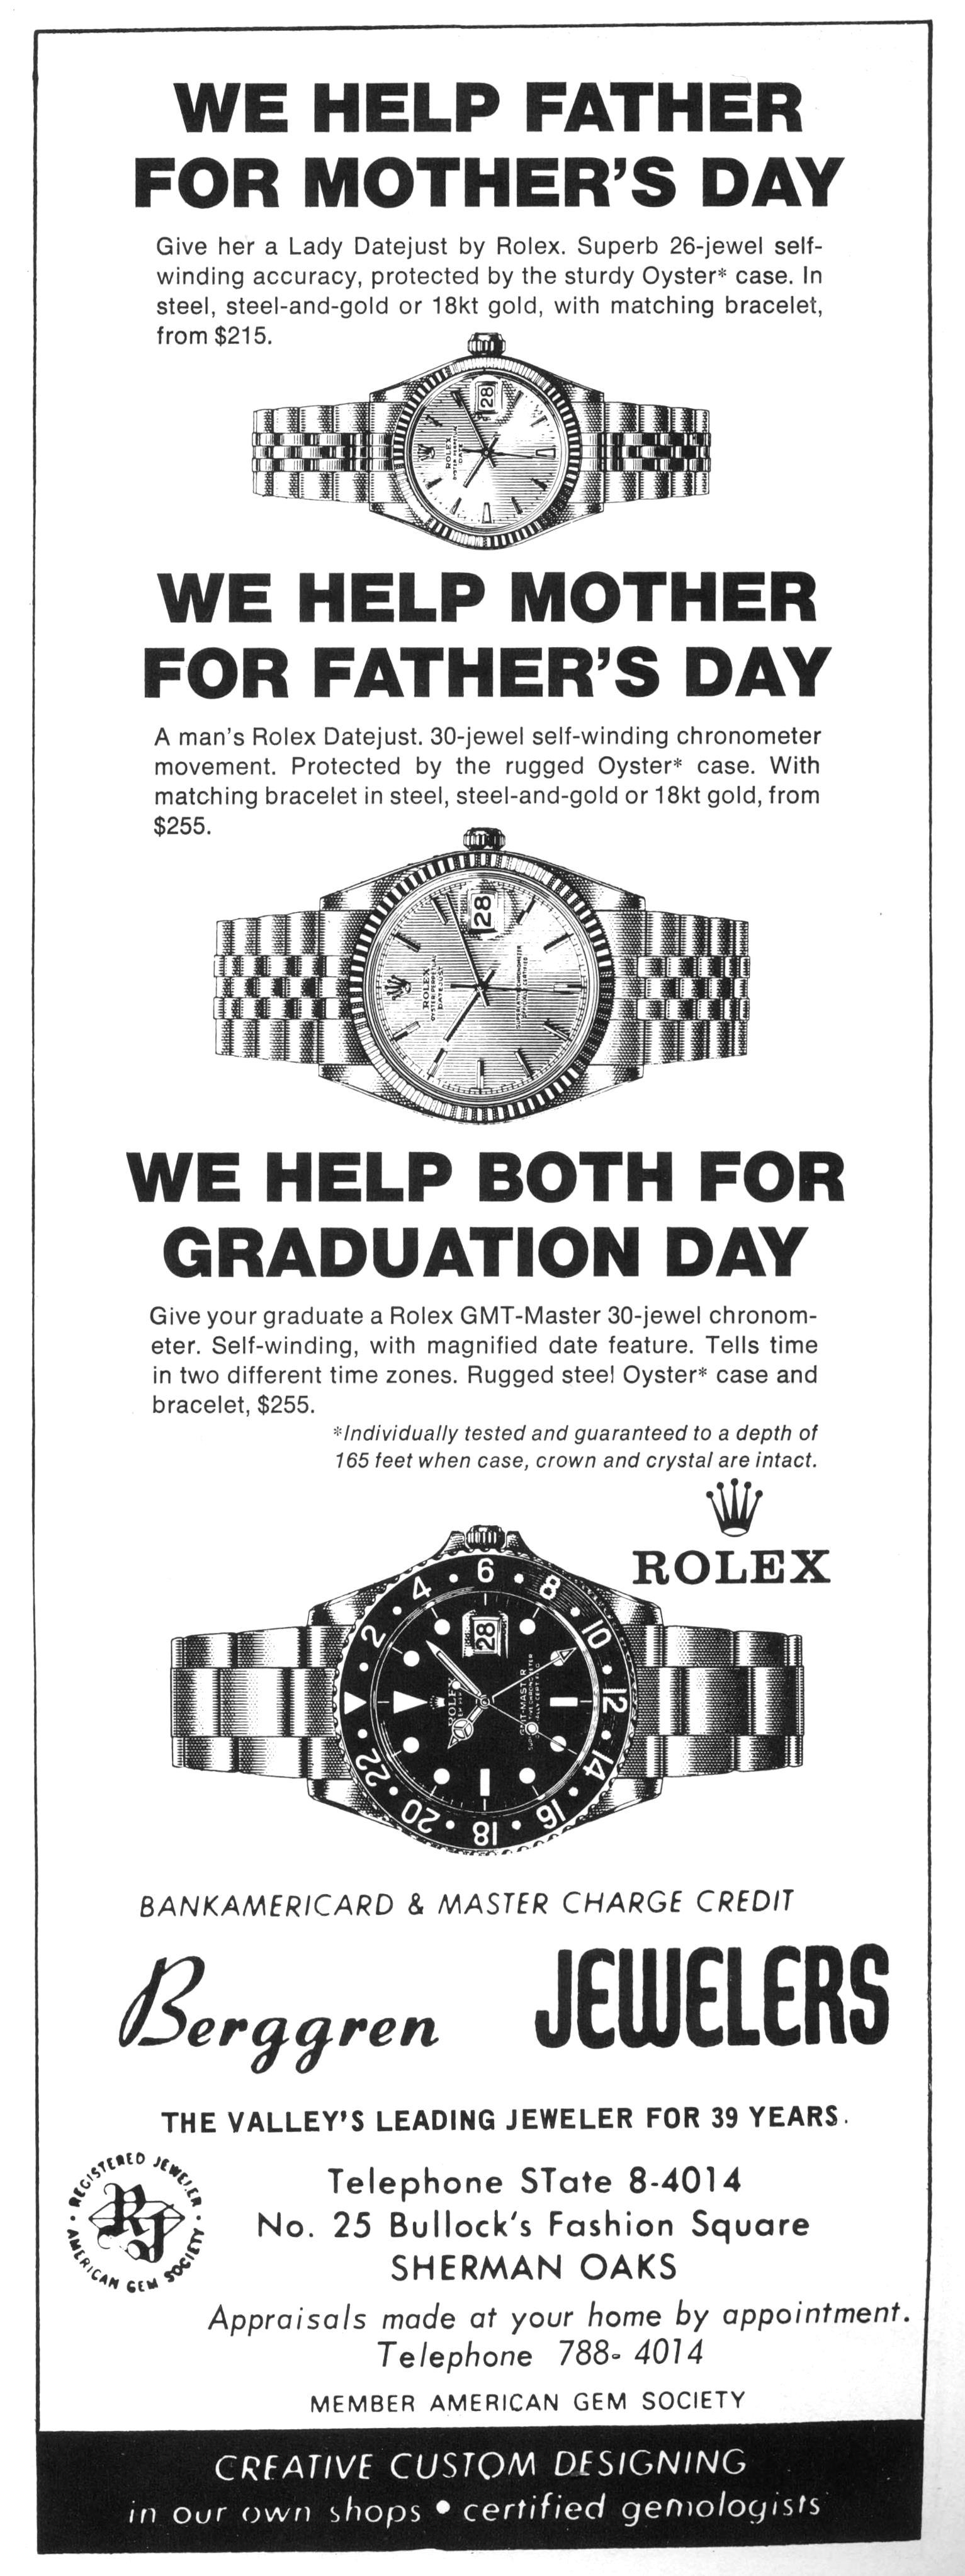 Rolex 1971 9.jpg